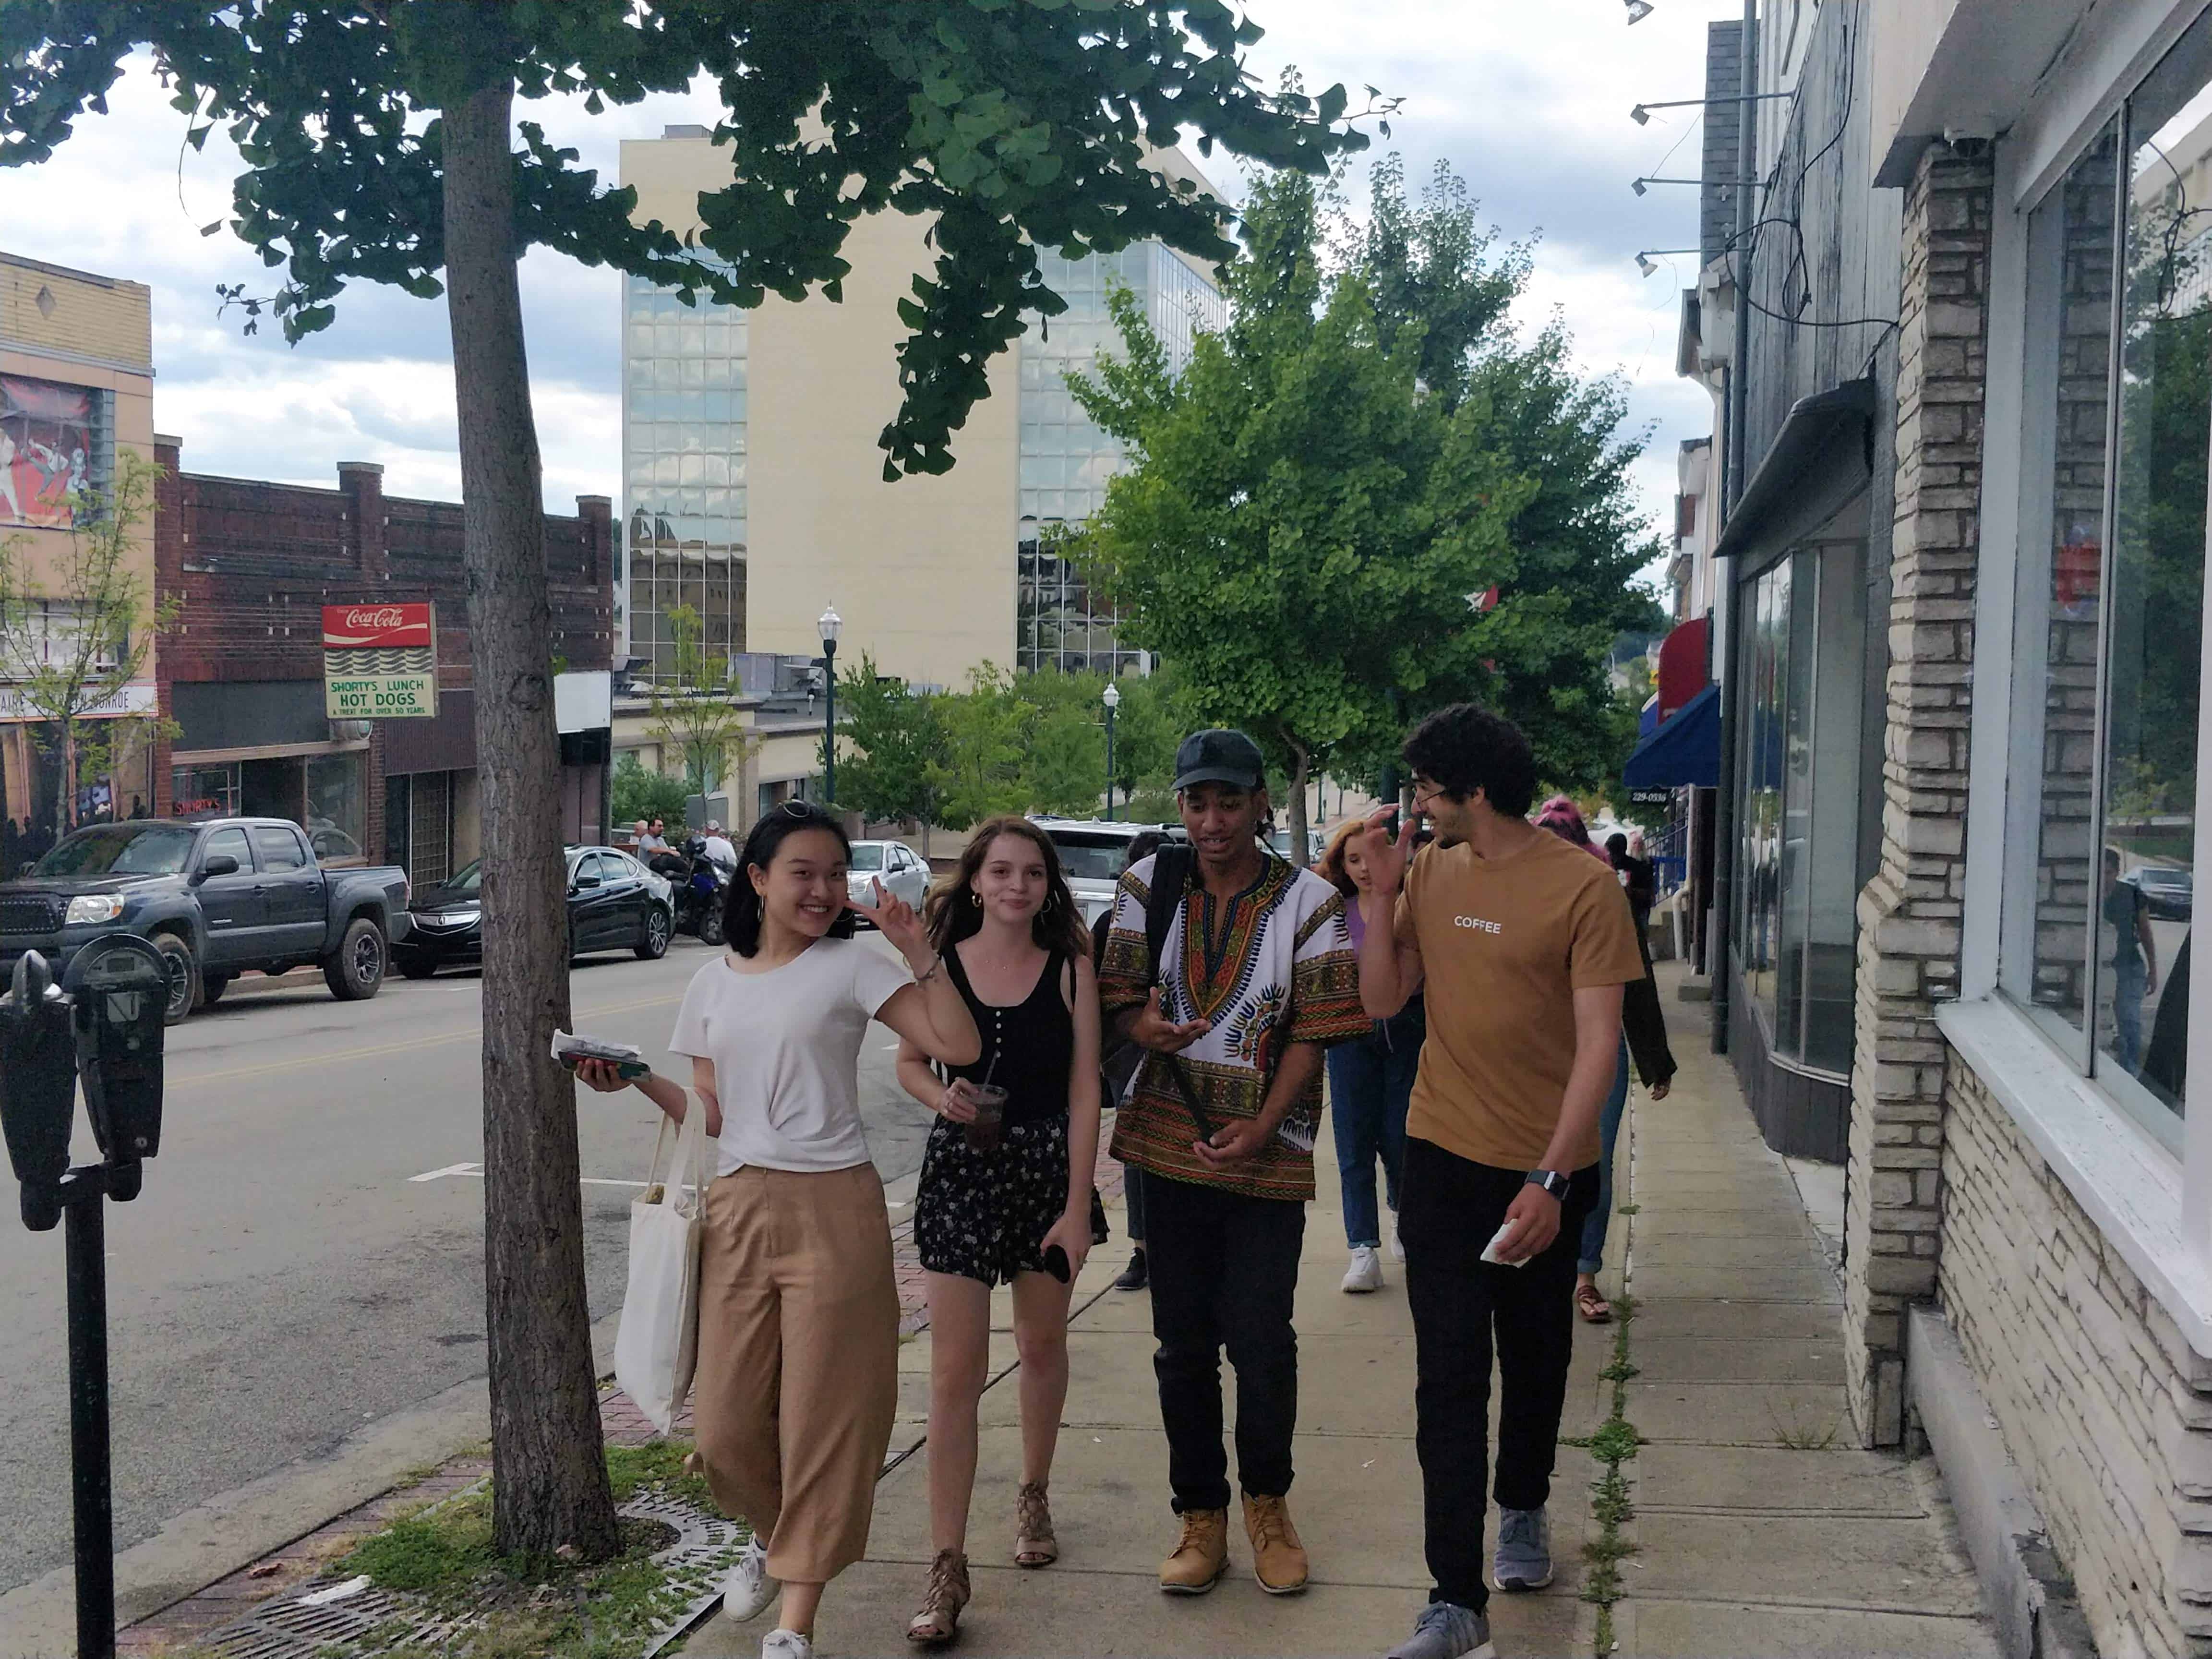 International Students walking through Washington, Pennsylvania.